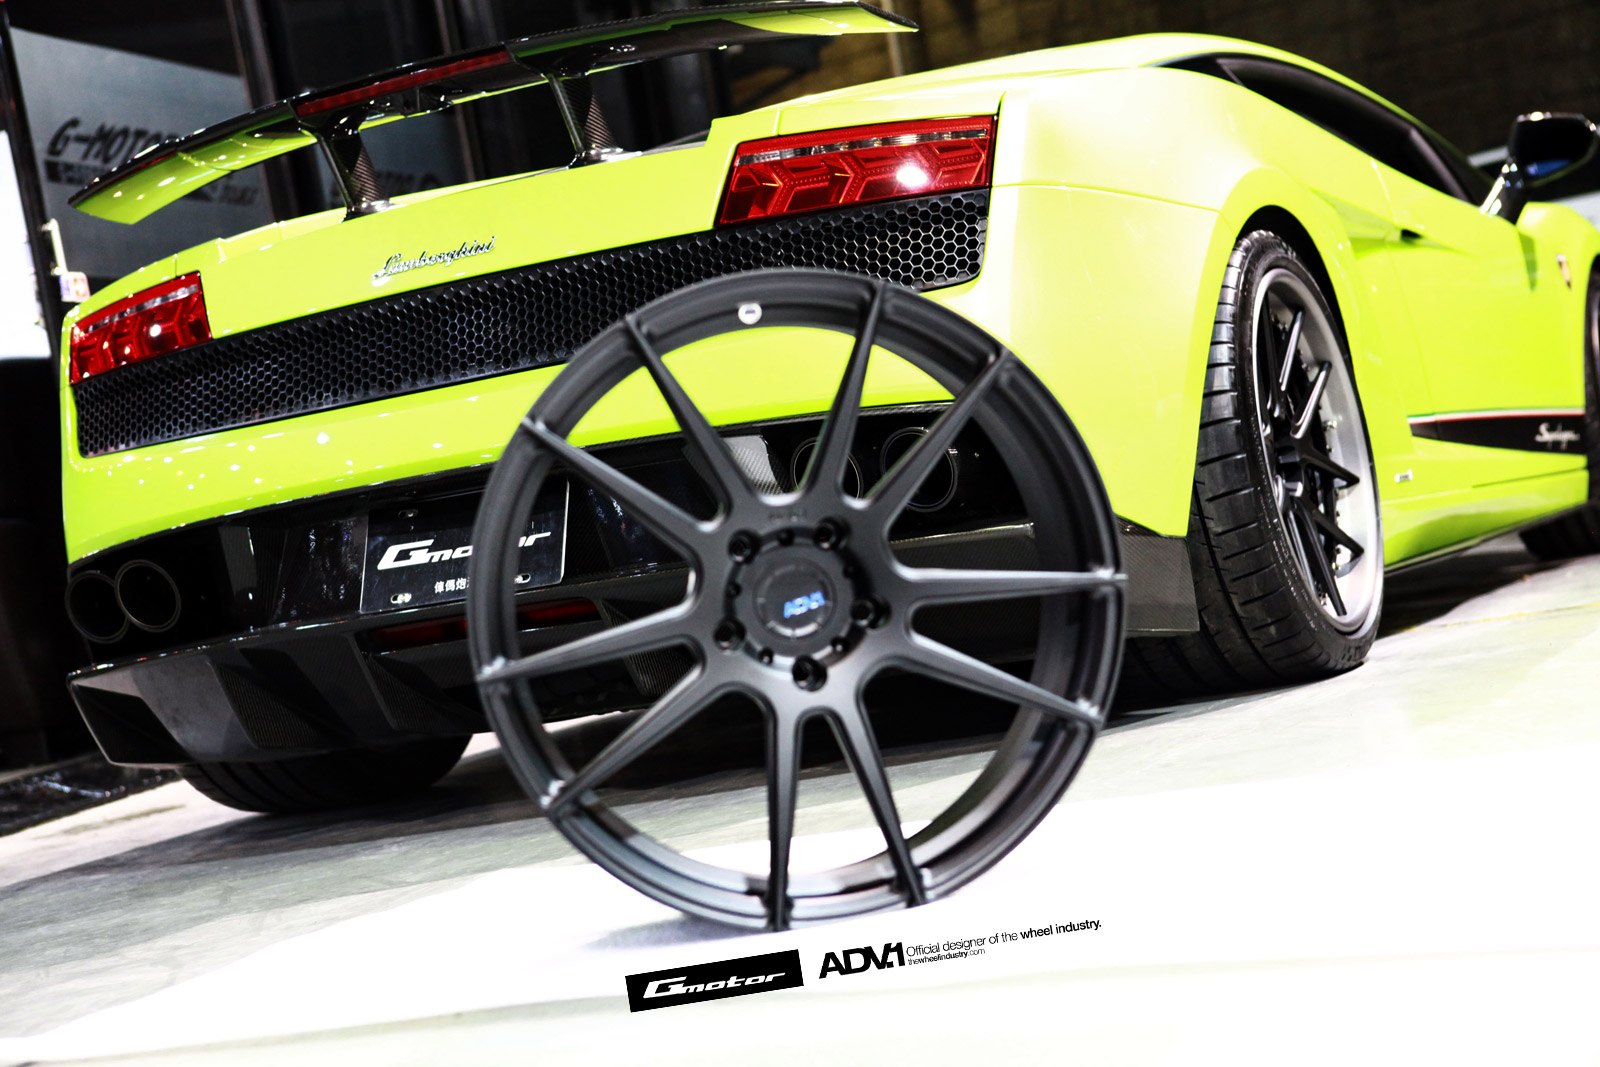 20 Inch Matte Black ADV1 Rims on Lamborghini Gallardo - Photo by ADV.1